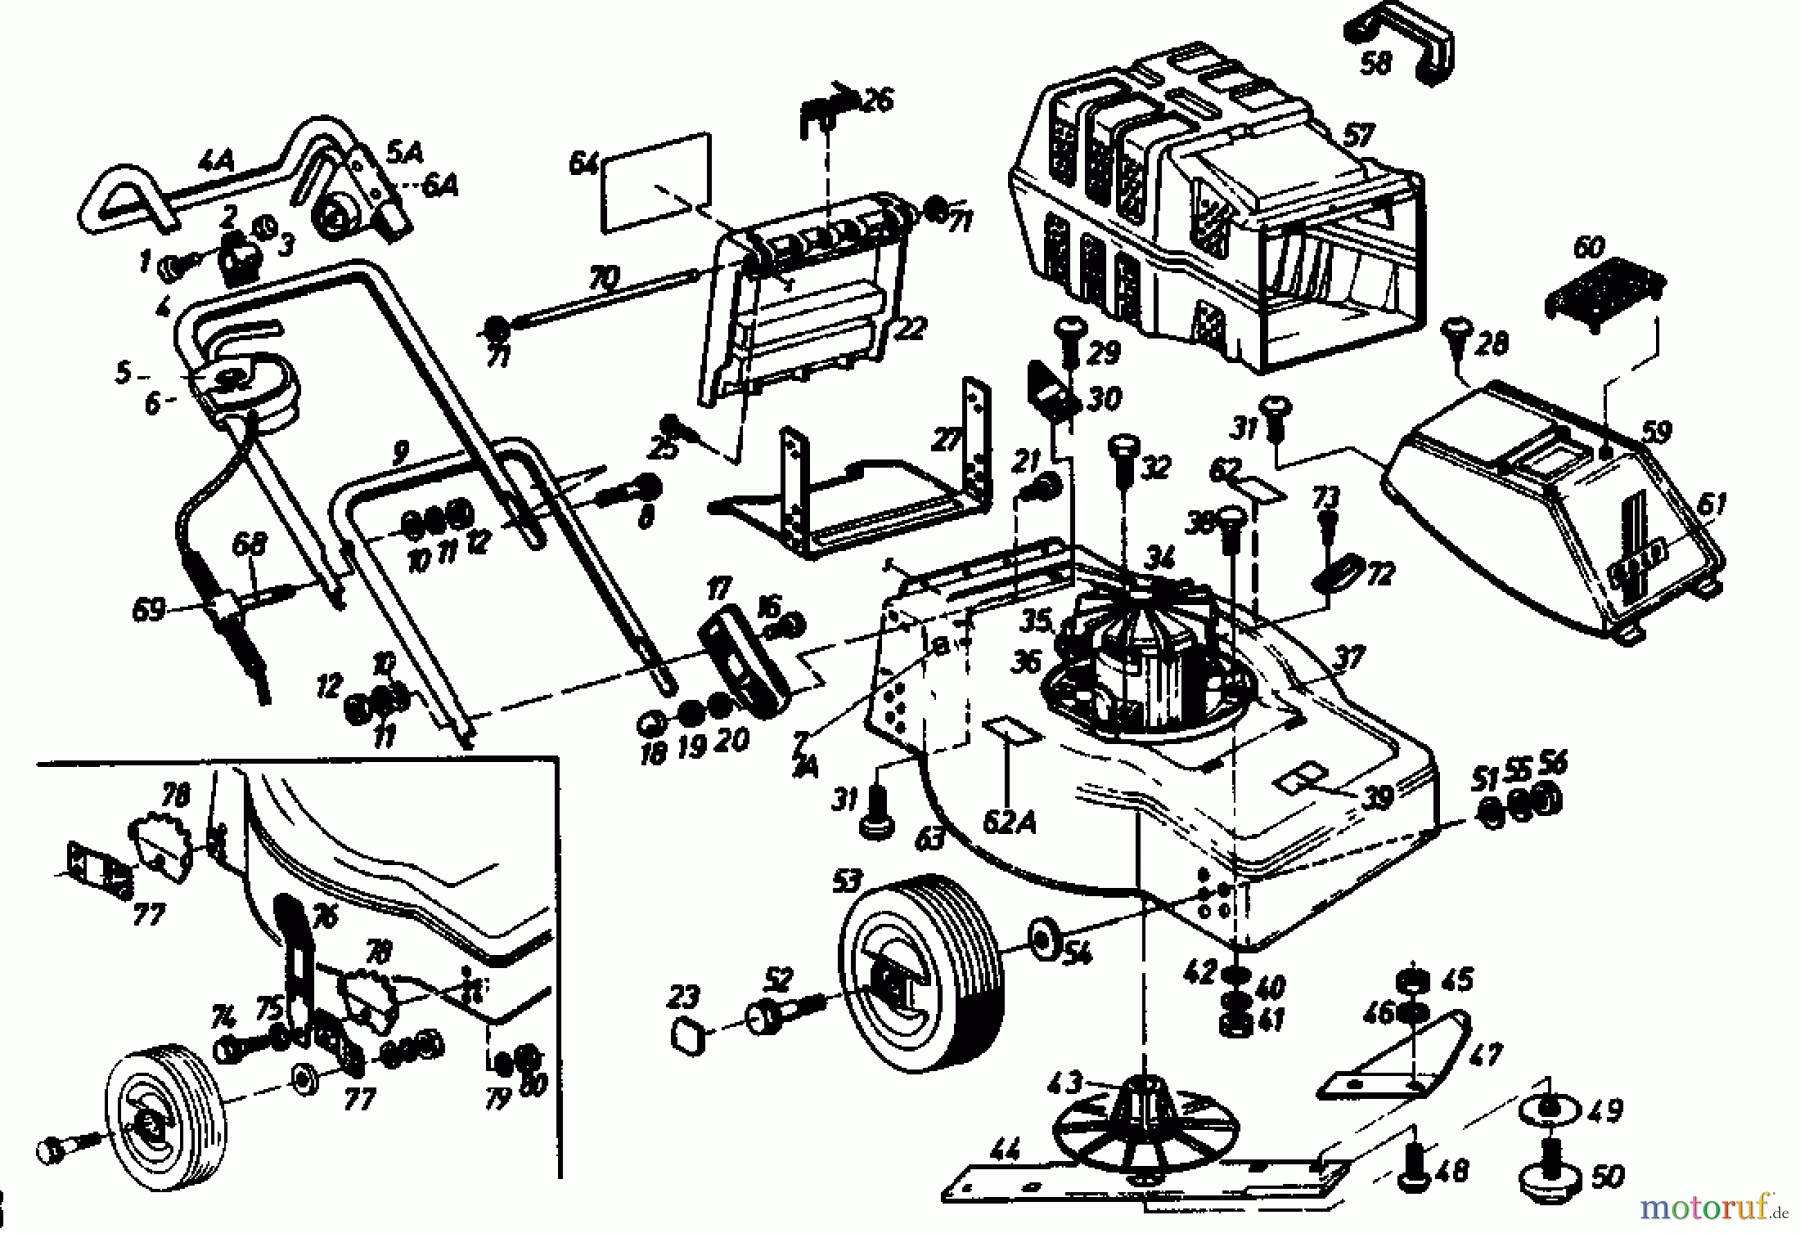  Golf Electric mower HE 02881.04  (1988) Basic machine